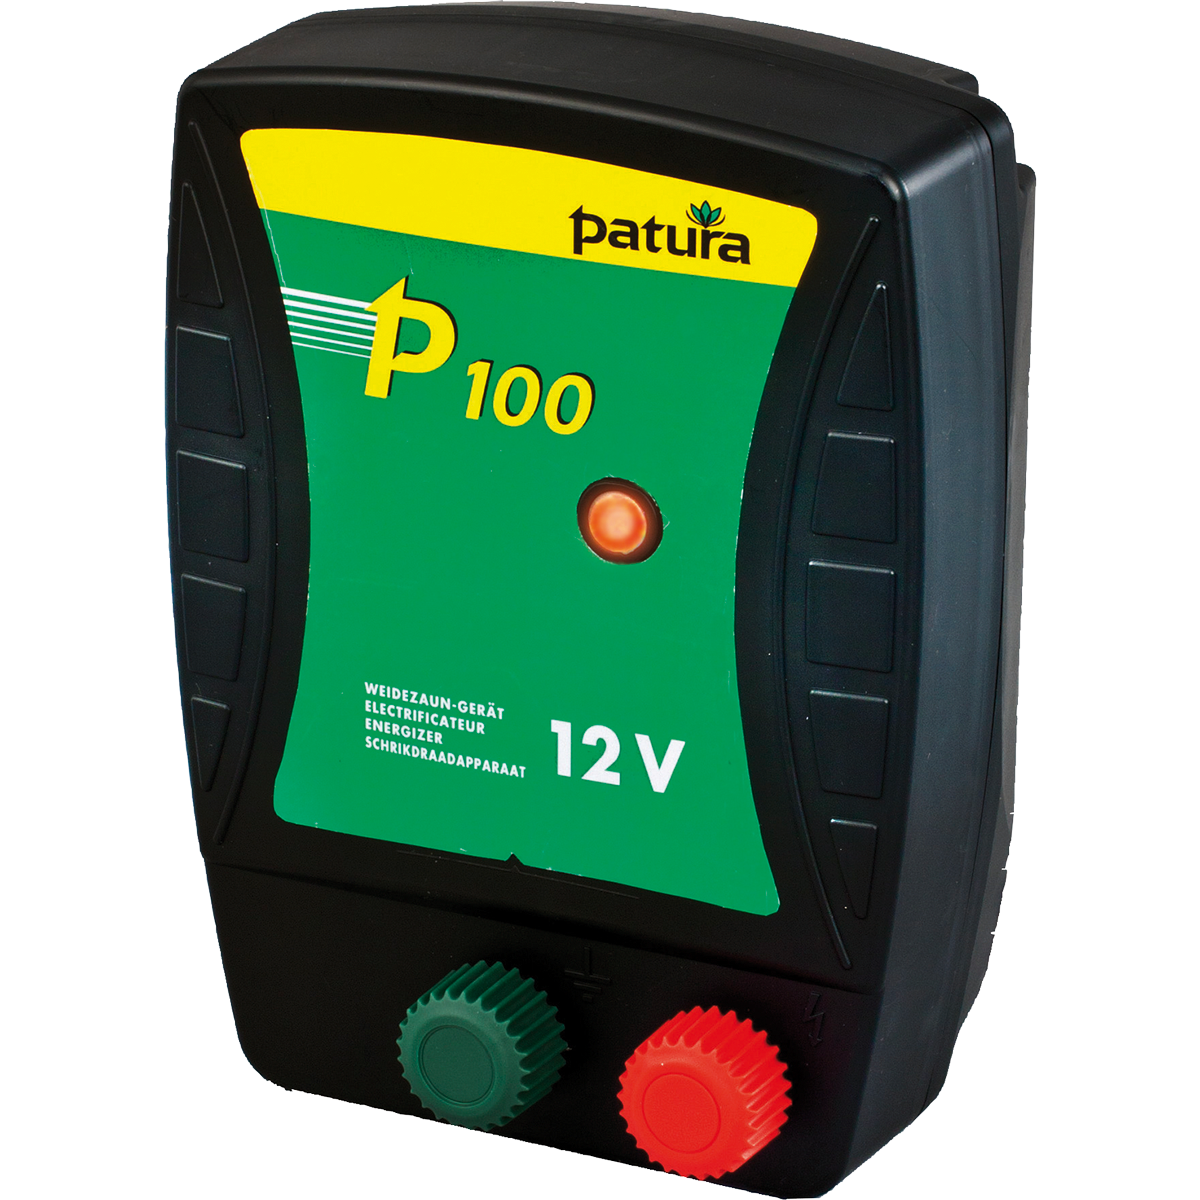 Patura p100 met afgesloten draagbox compact (max. 84 ah accu)